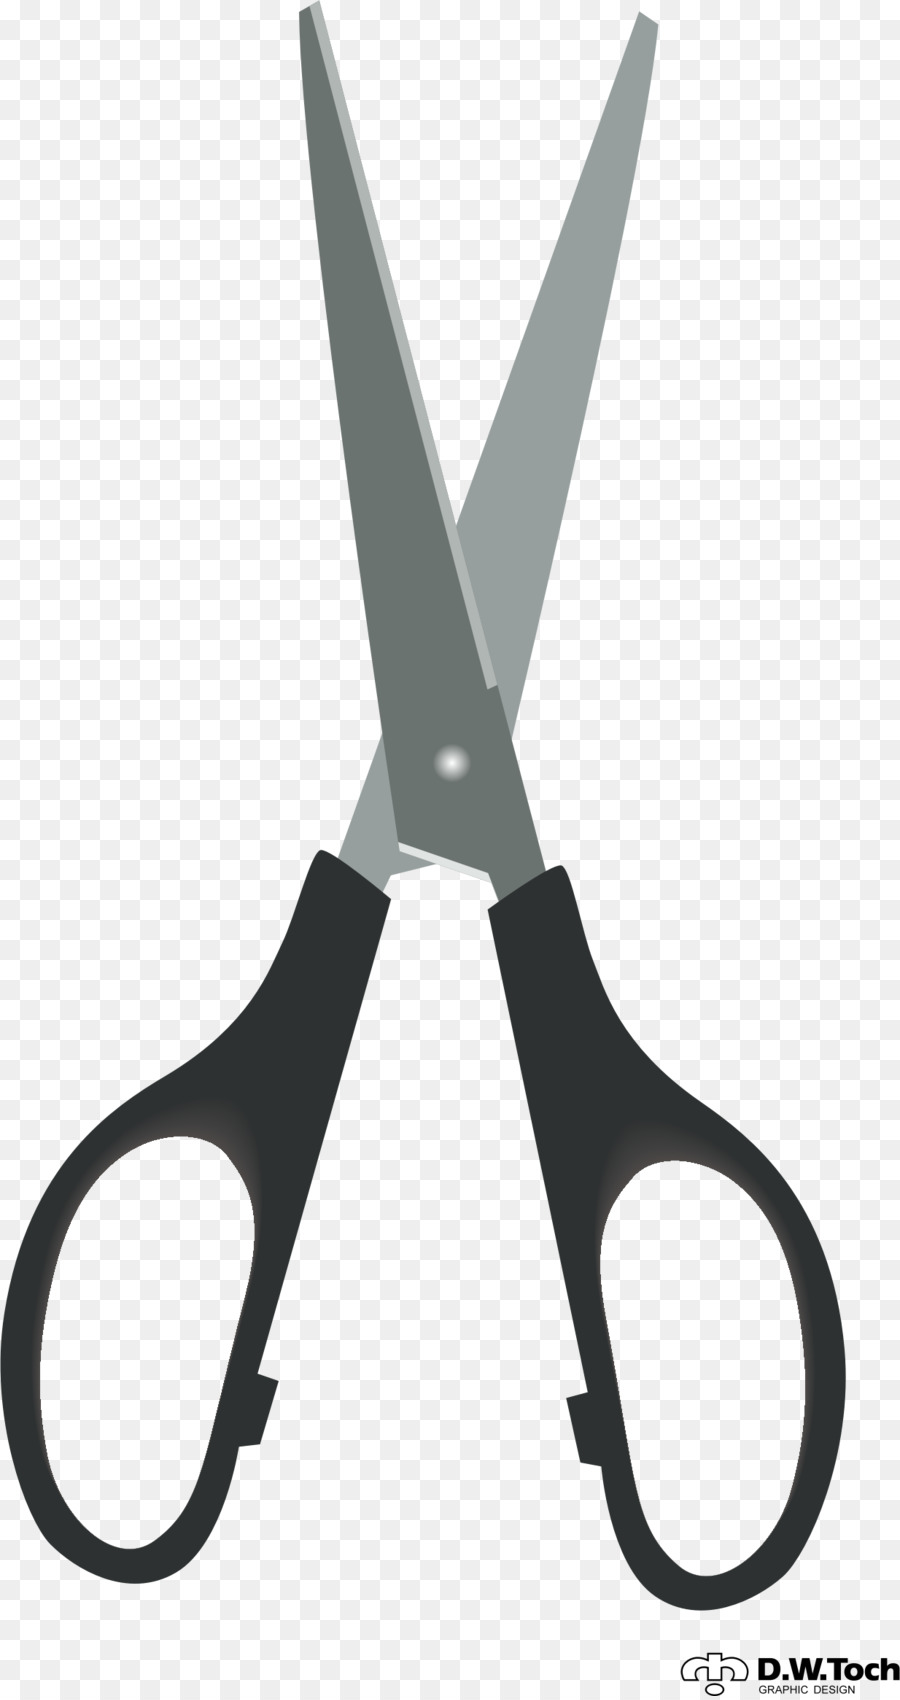 Scissors Clip art - scissors tape measure png download - 1234*2325 - Free Transparent Scissors png Download.